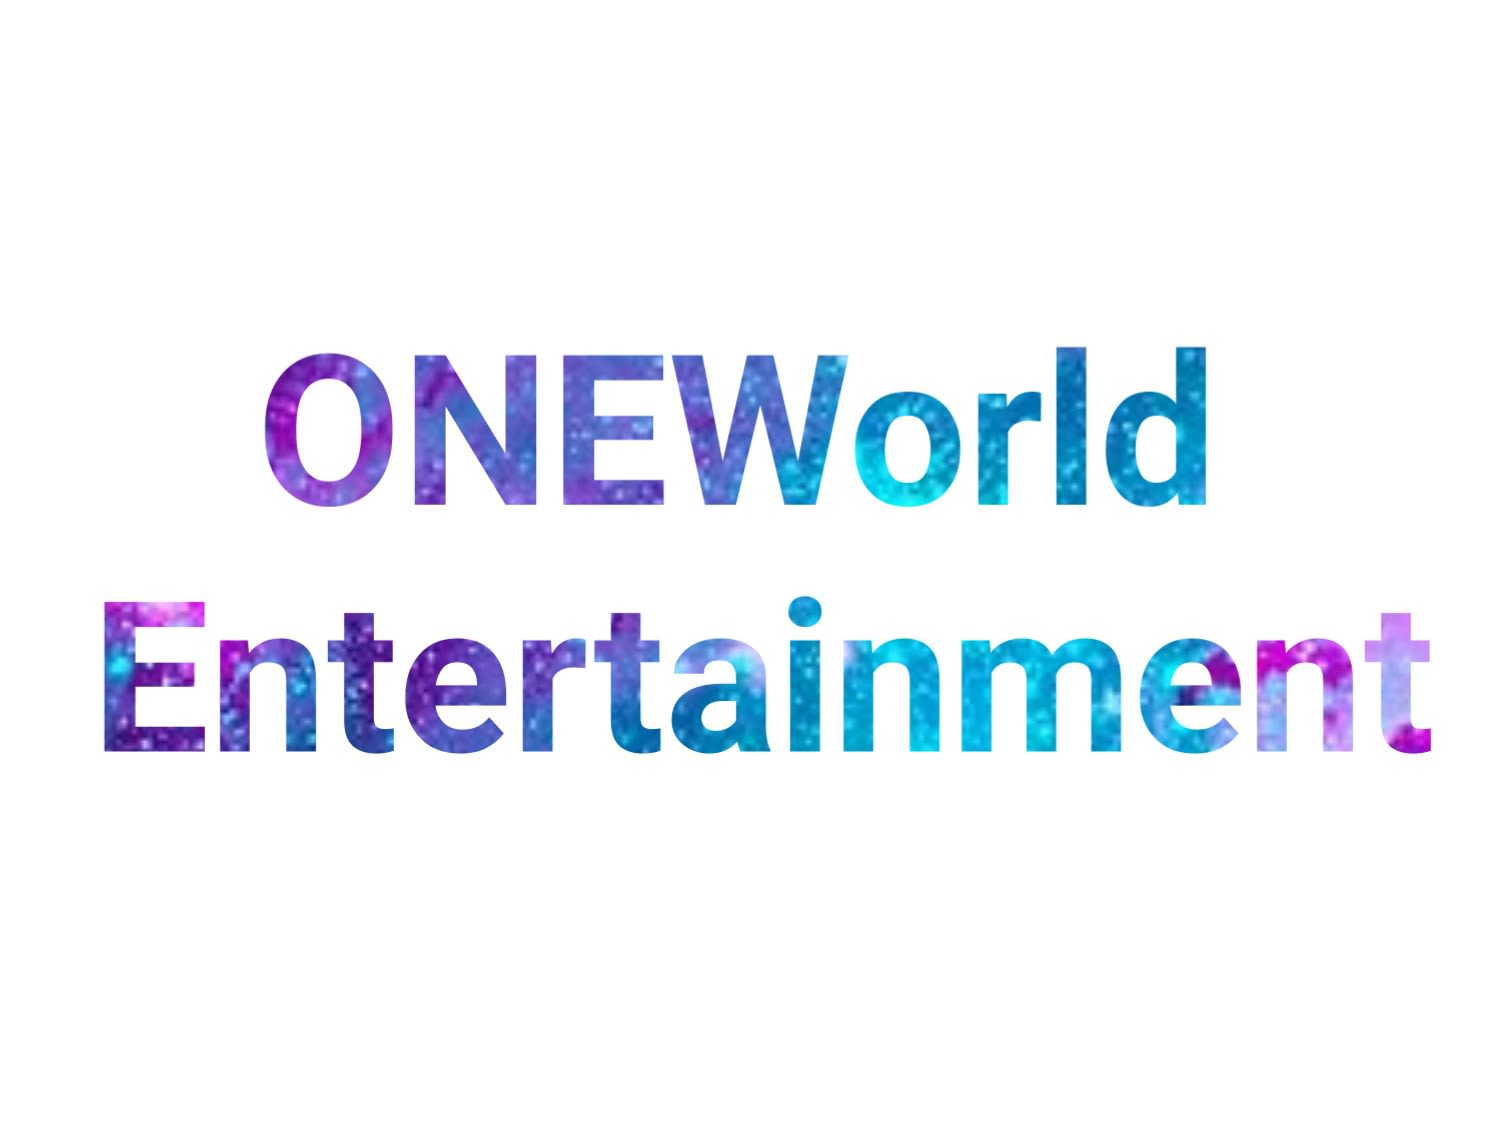 One World Entertainment